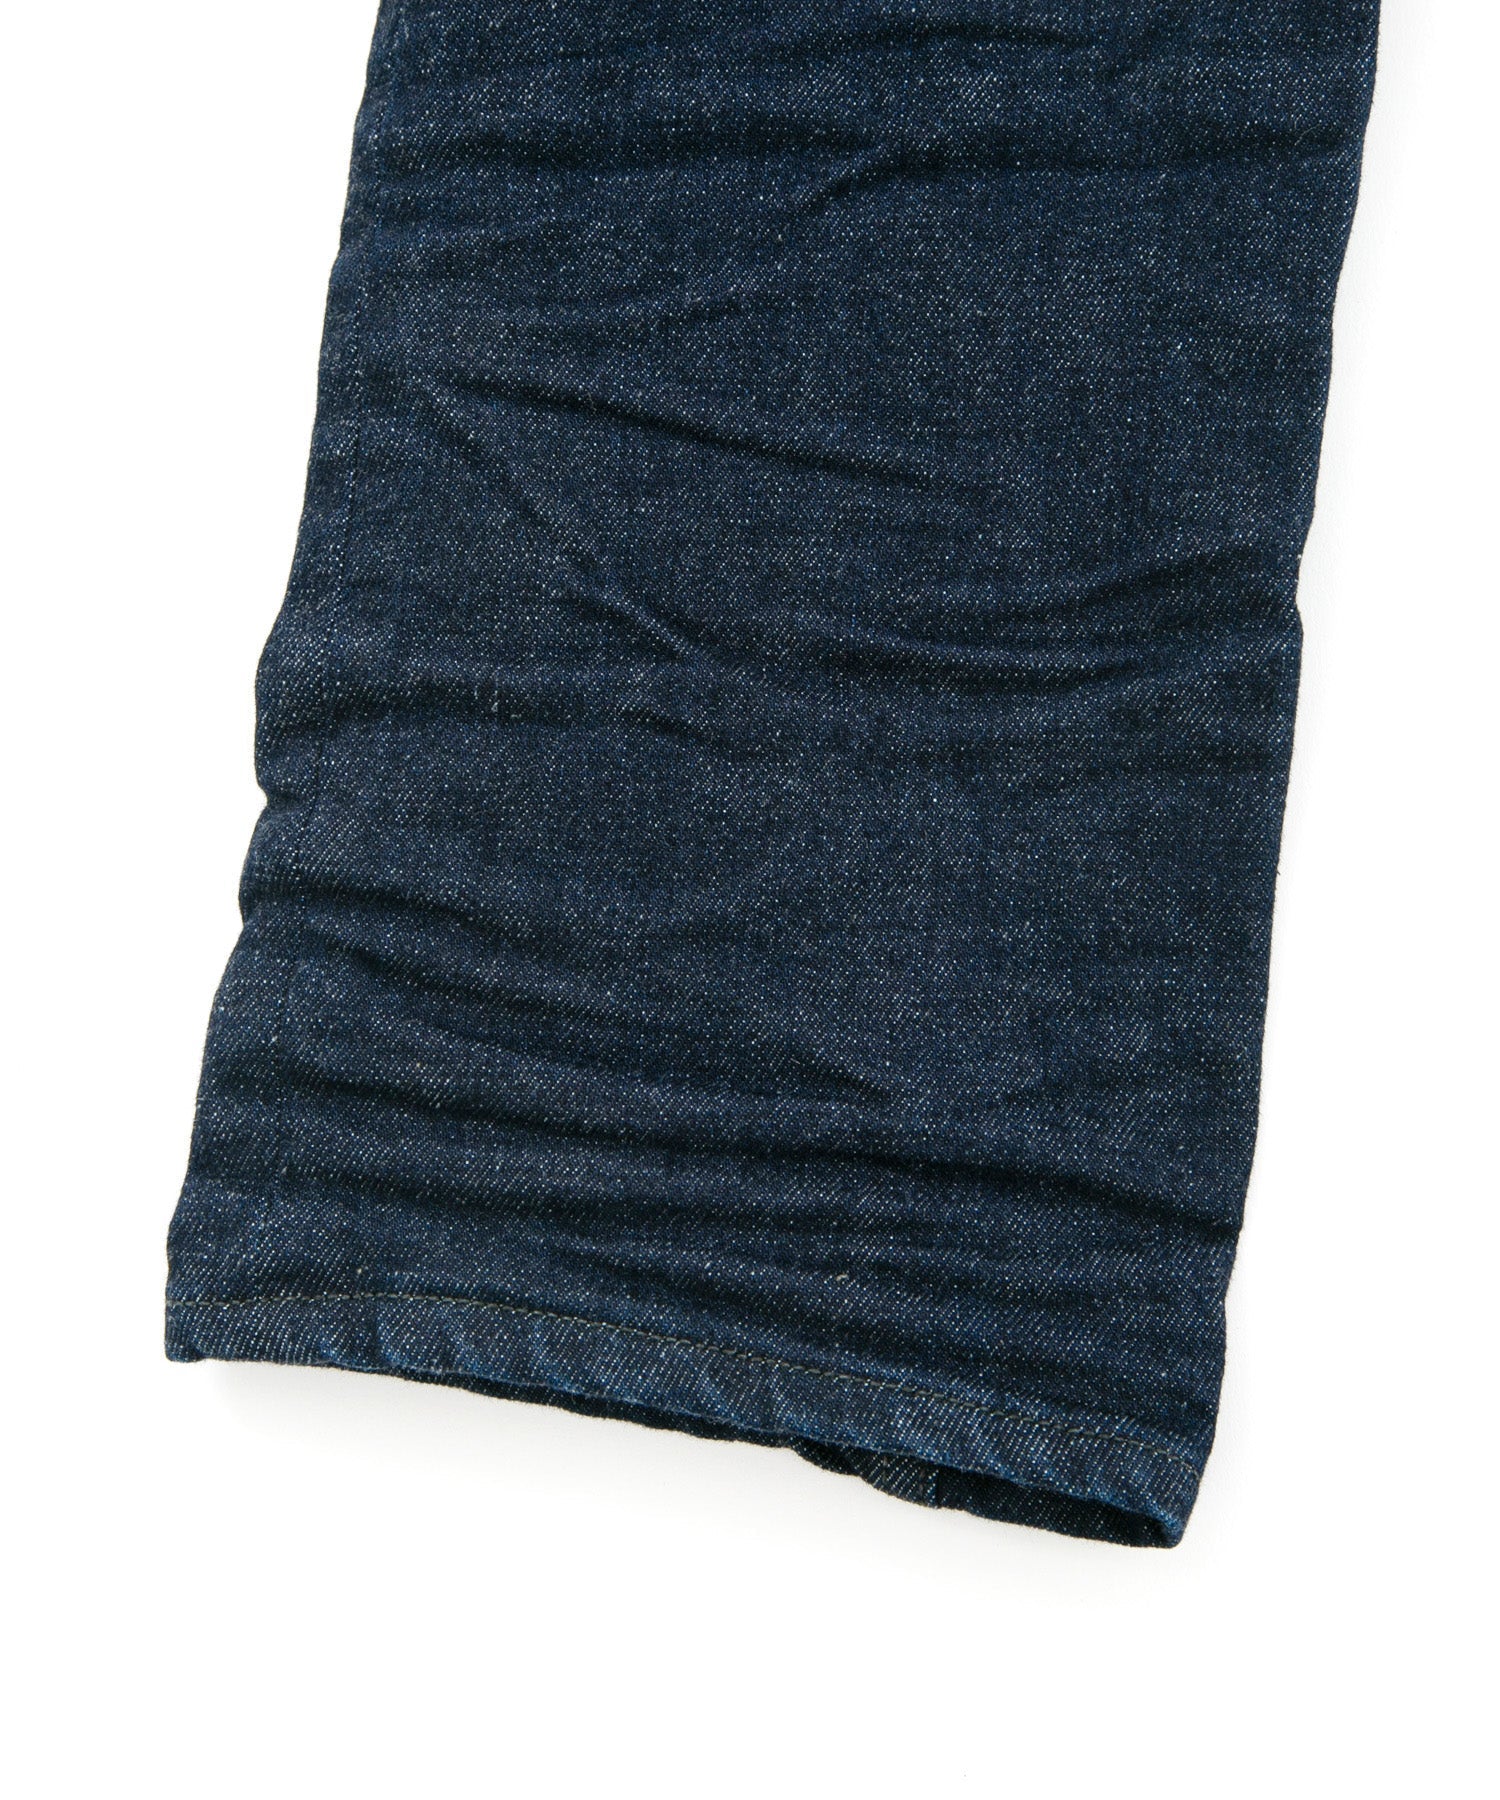 Load image into Gallery viewer, 12.5oz Organic Cotton Stretch Denim Tight Straight Jeans - INDIGO